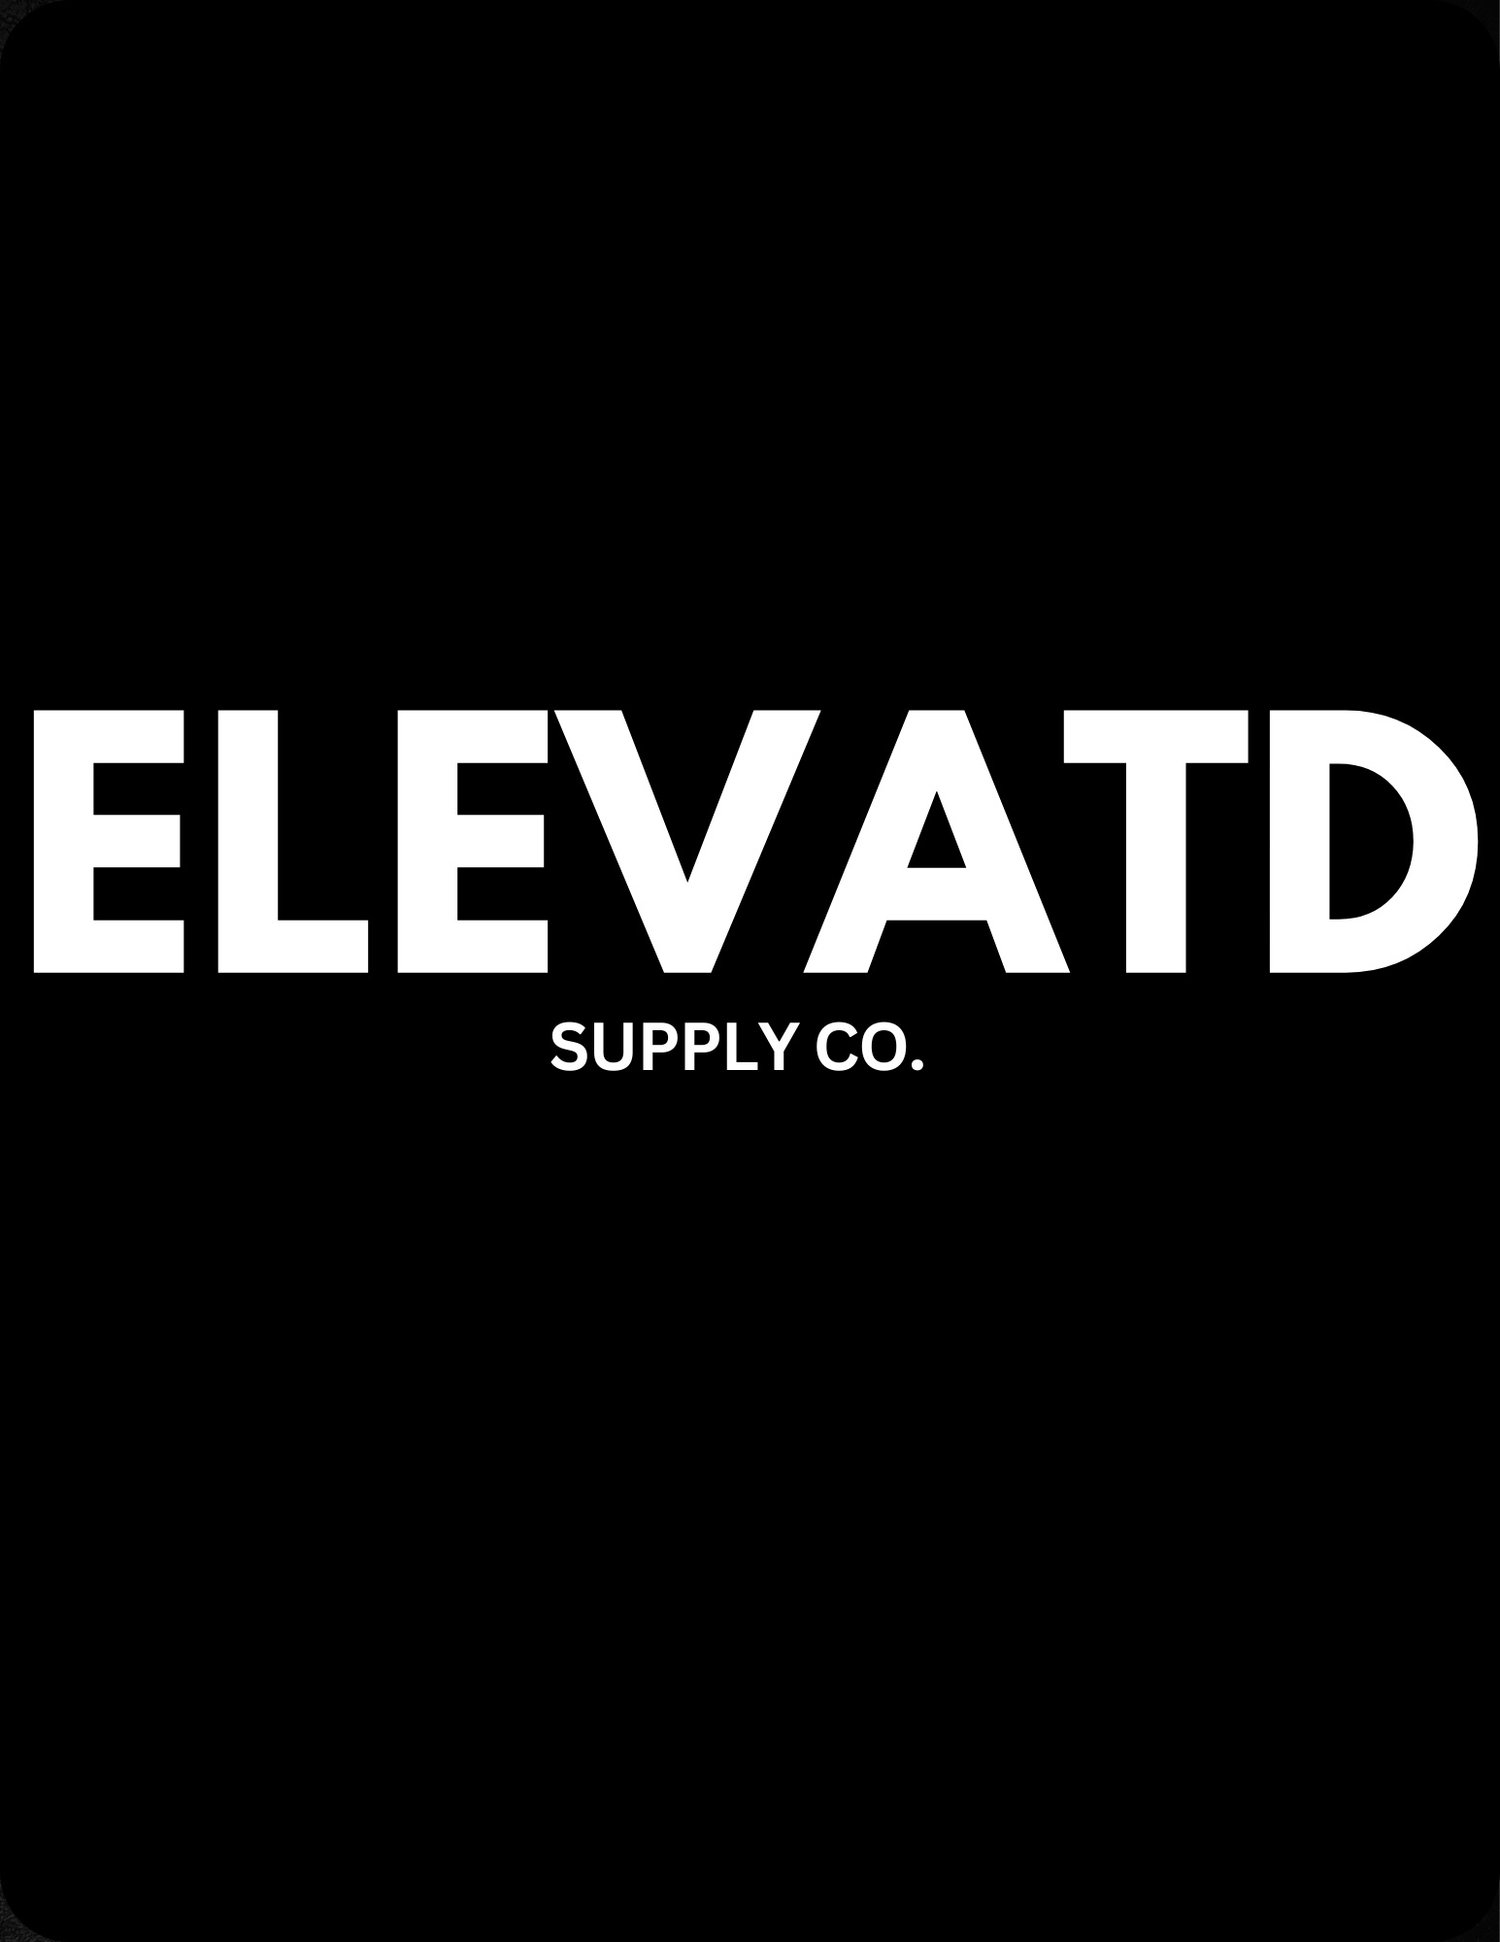 ELEVATD SUPPLY CO.